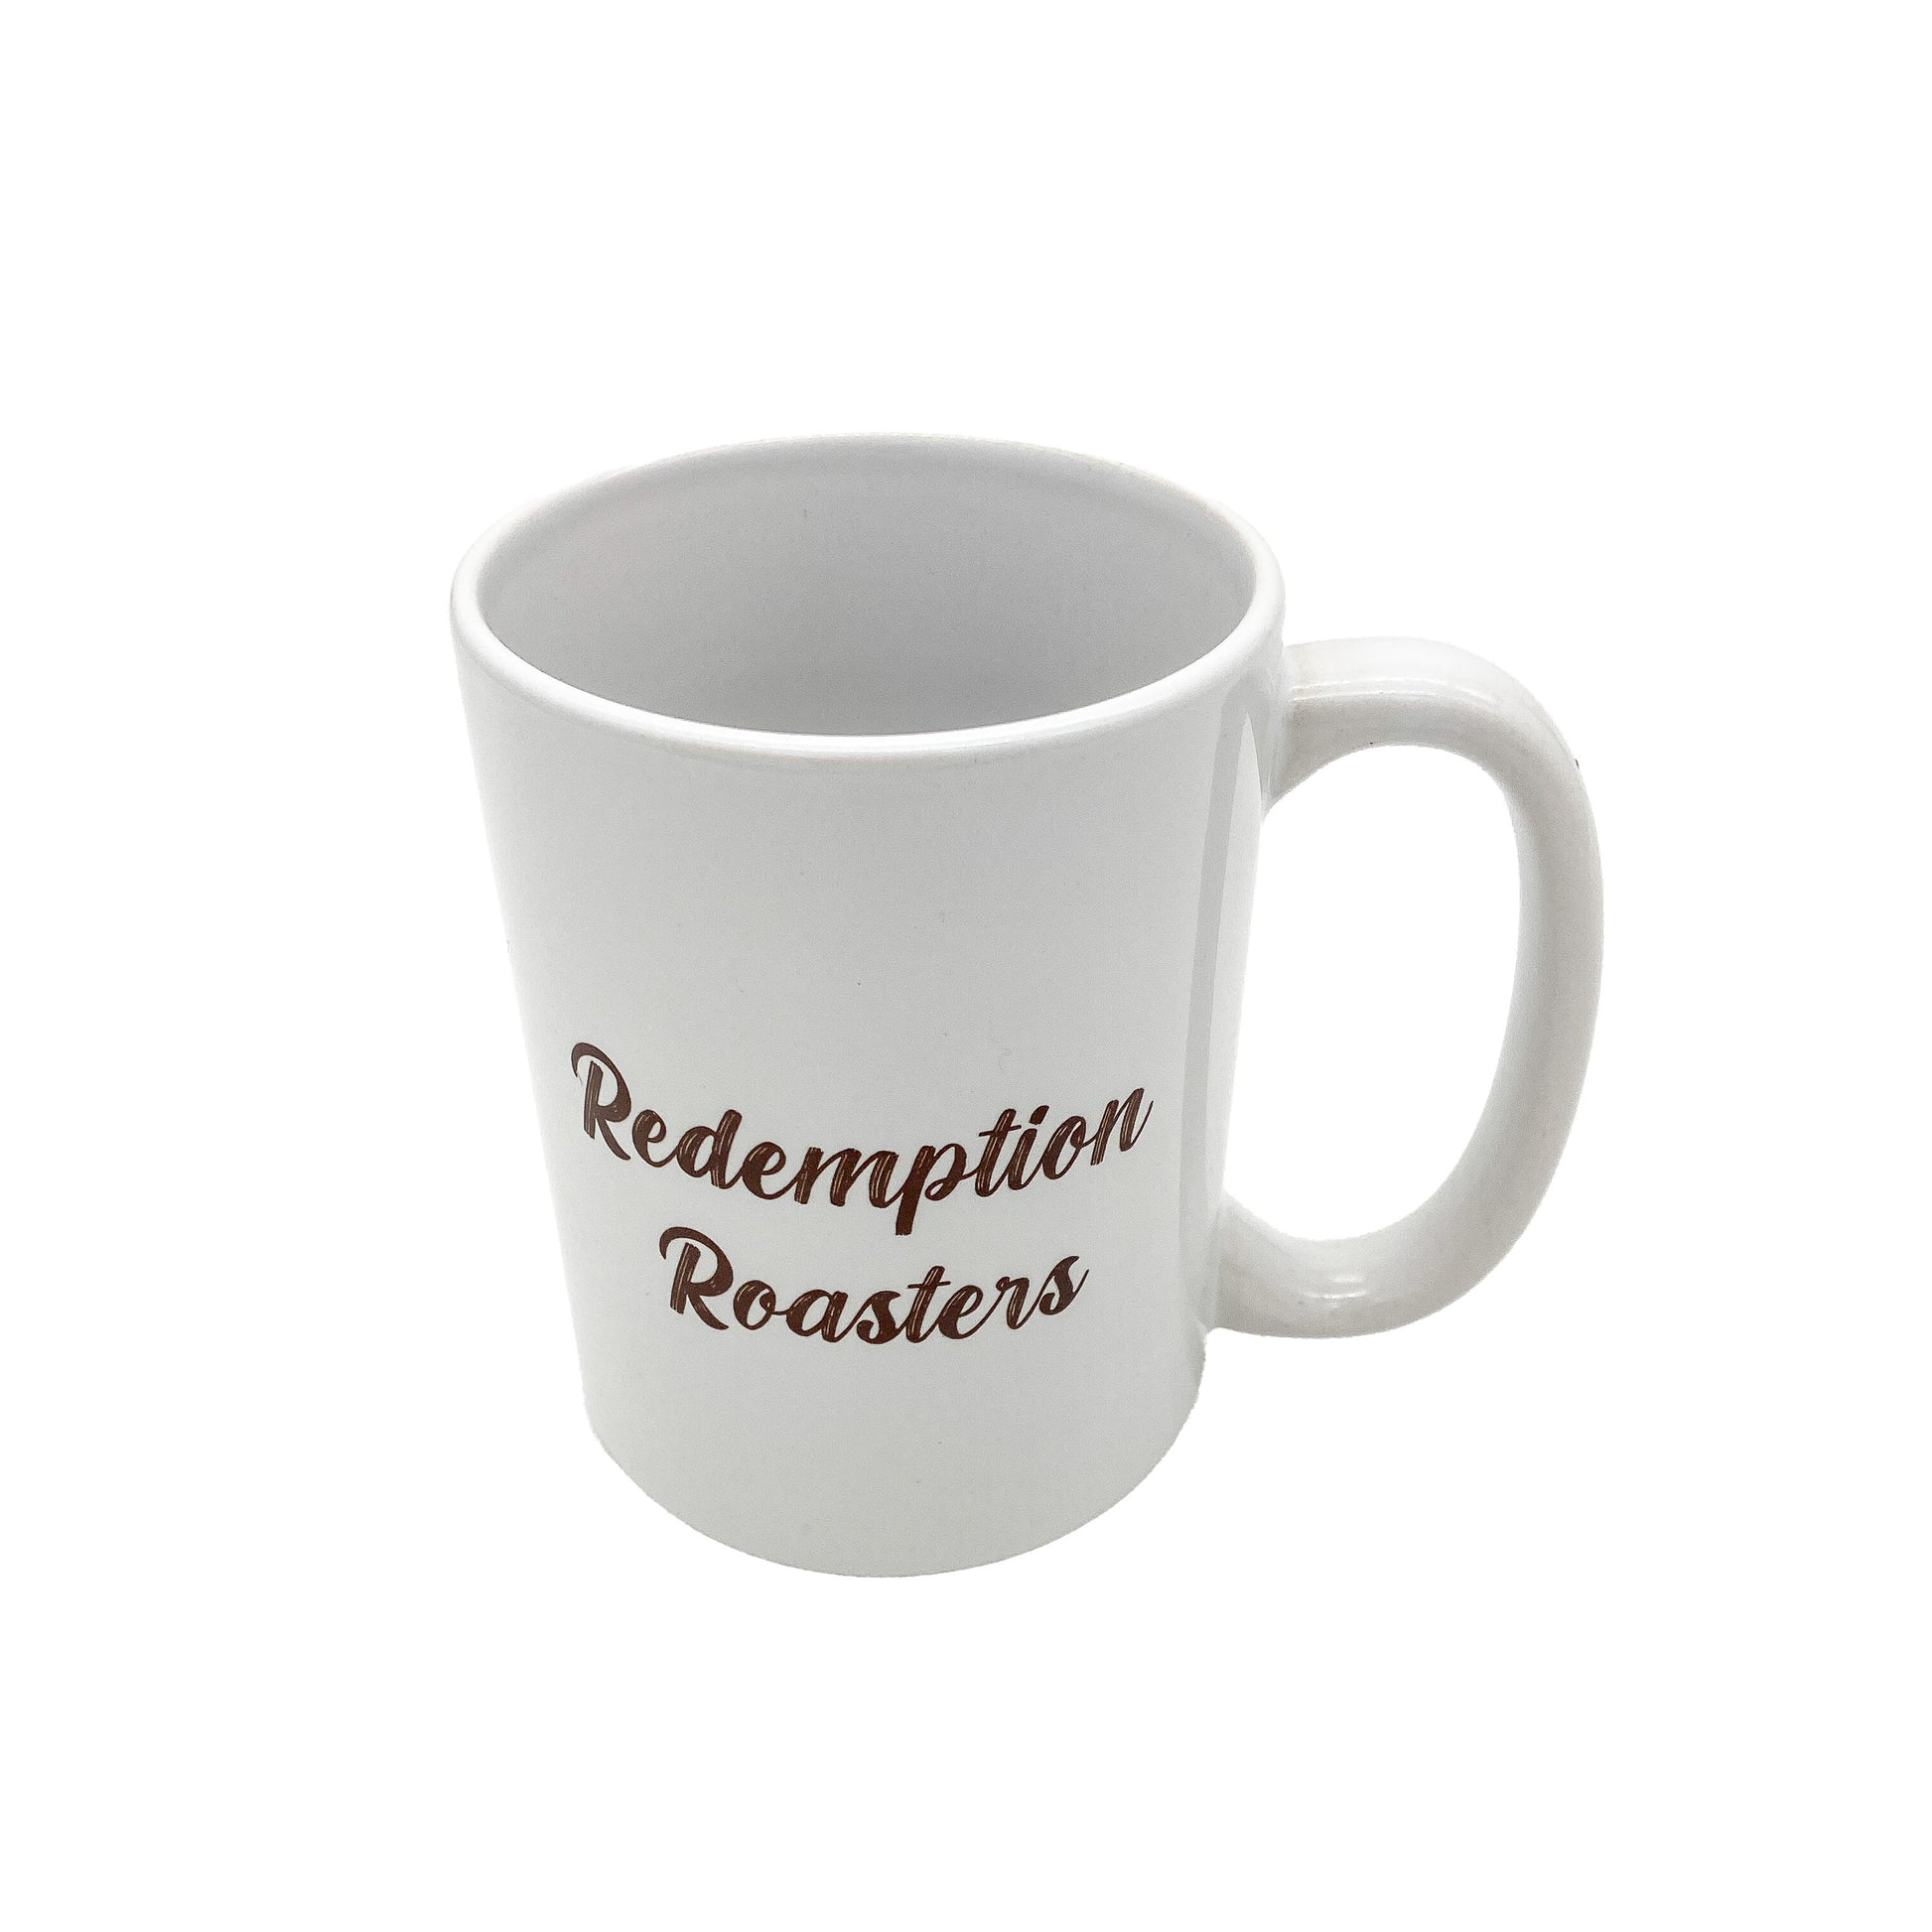 ceramic mug with redemption roaster logo